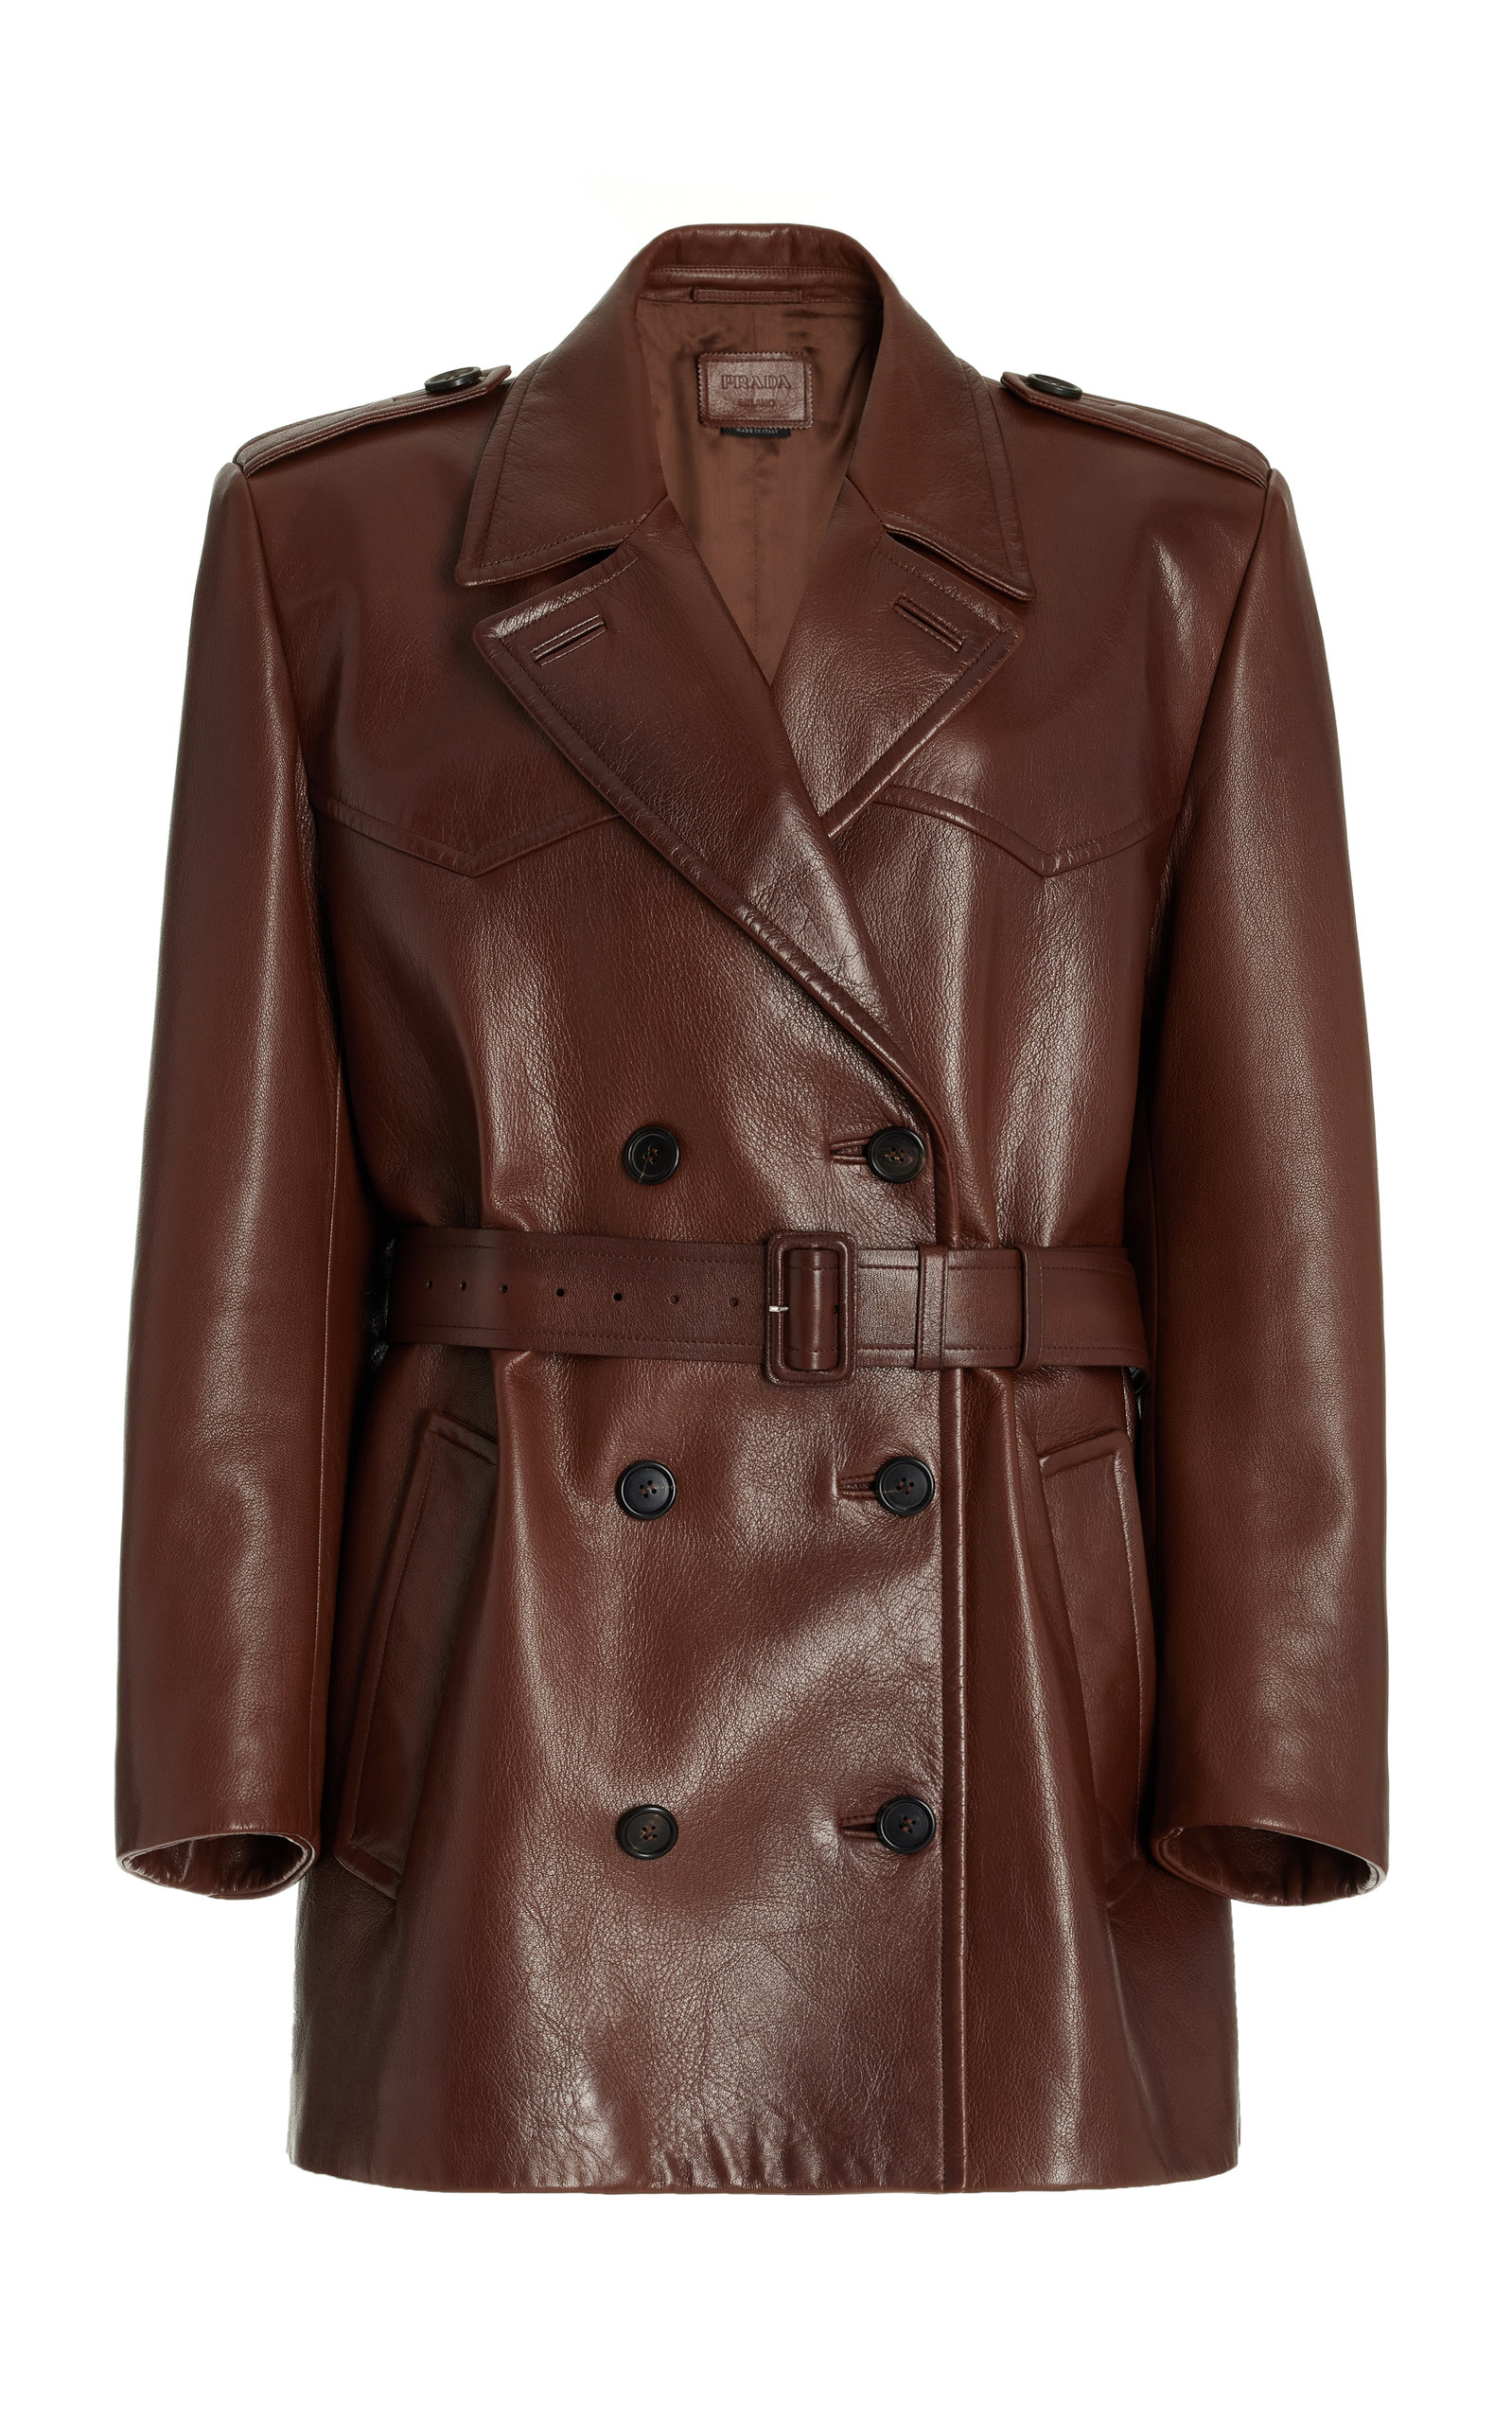 Prada - Double-Breasted Leather Jacket - Brown - IT 38 - Moda Operandi